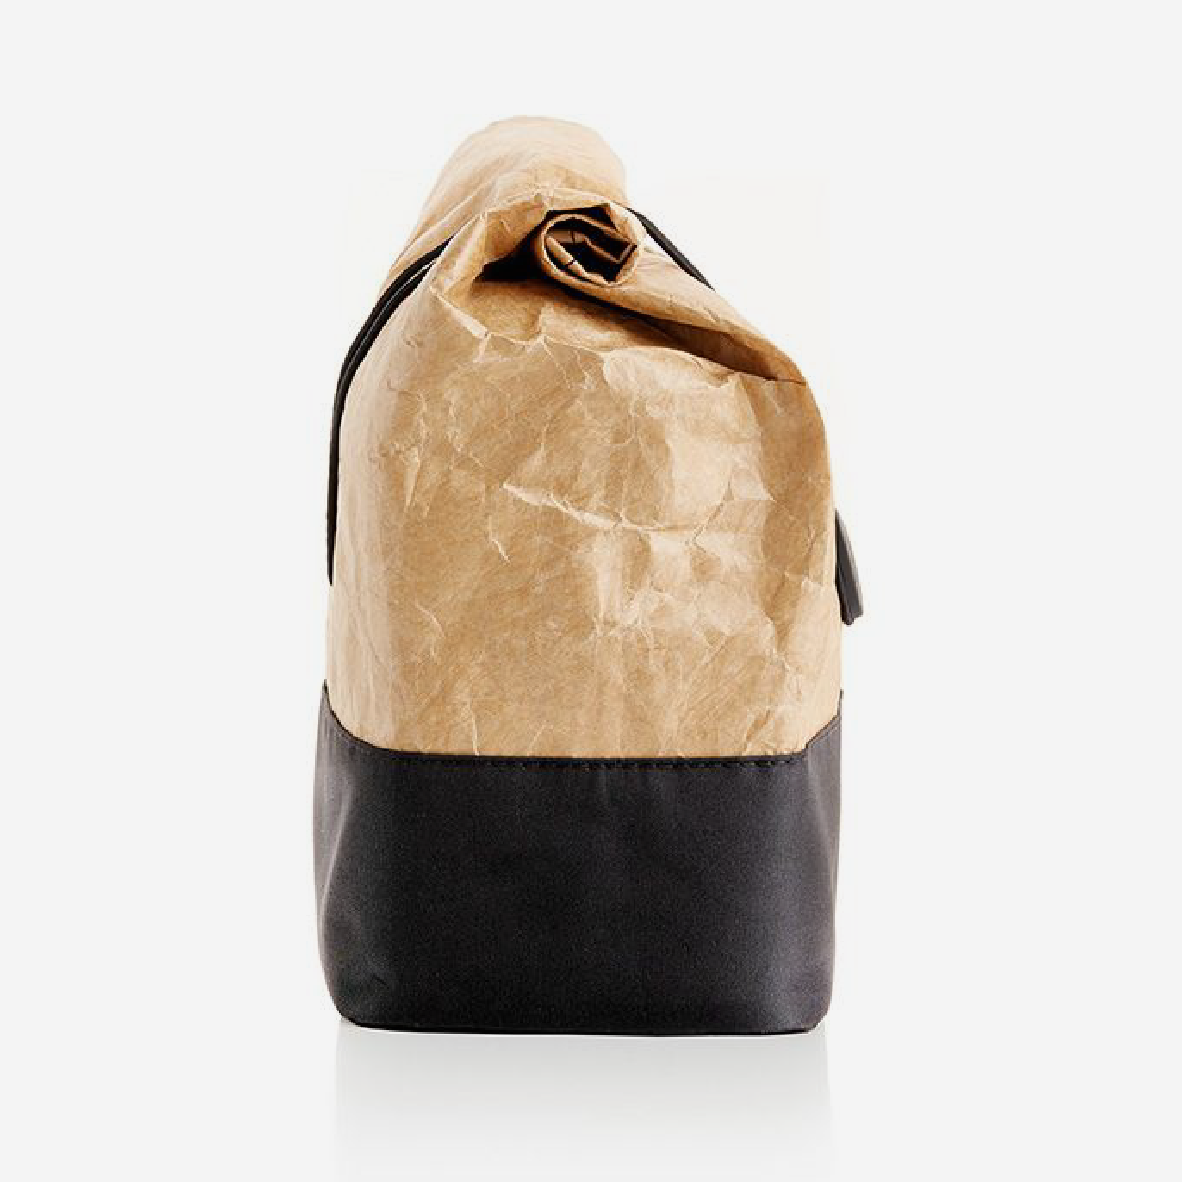 Lunch Bag To Go - Kraft